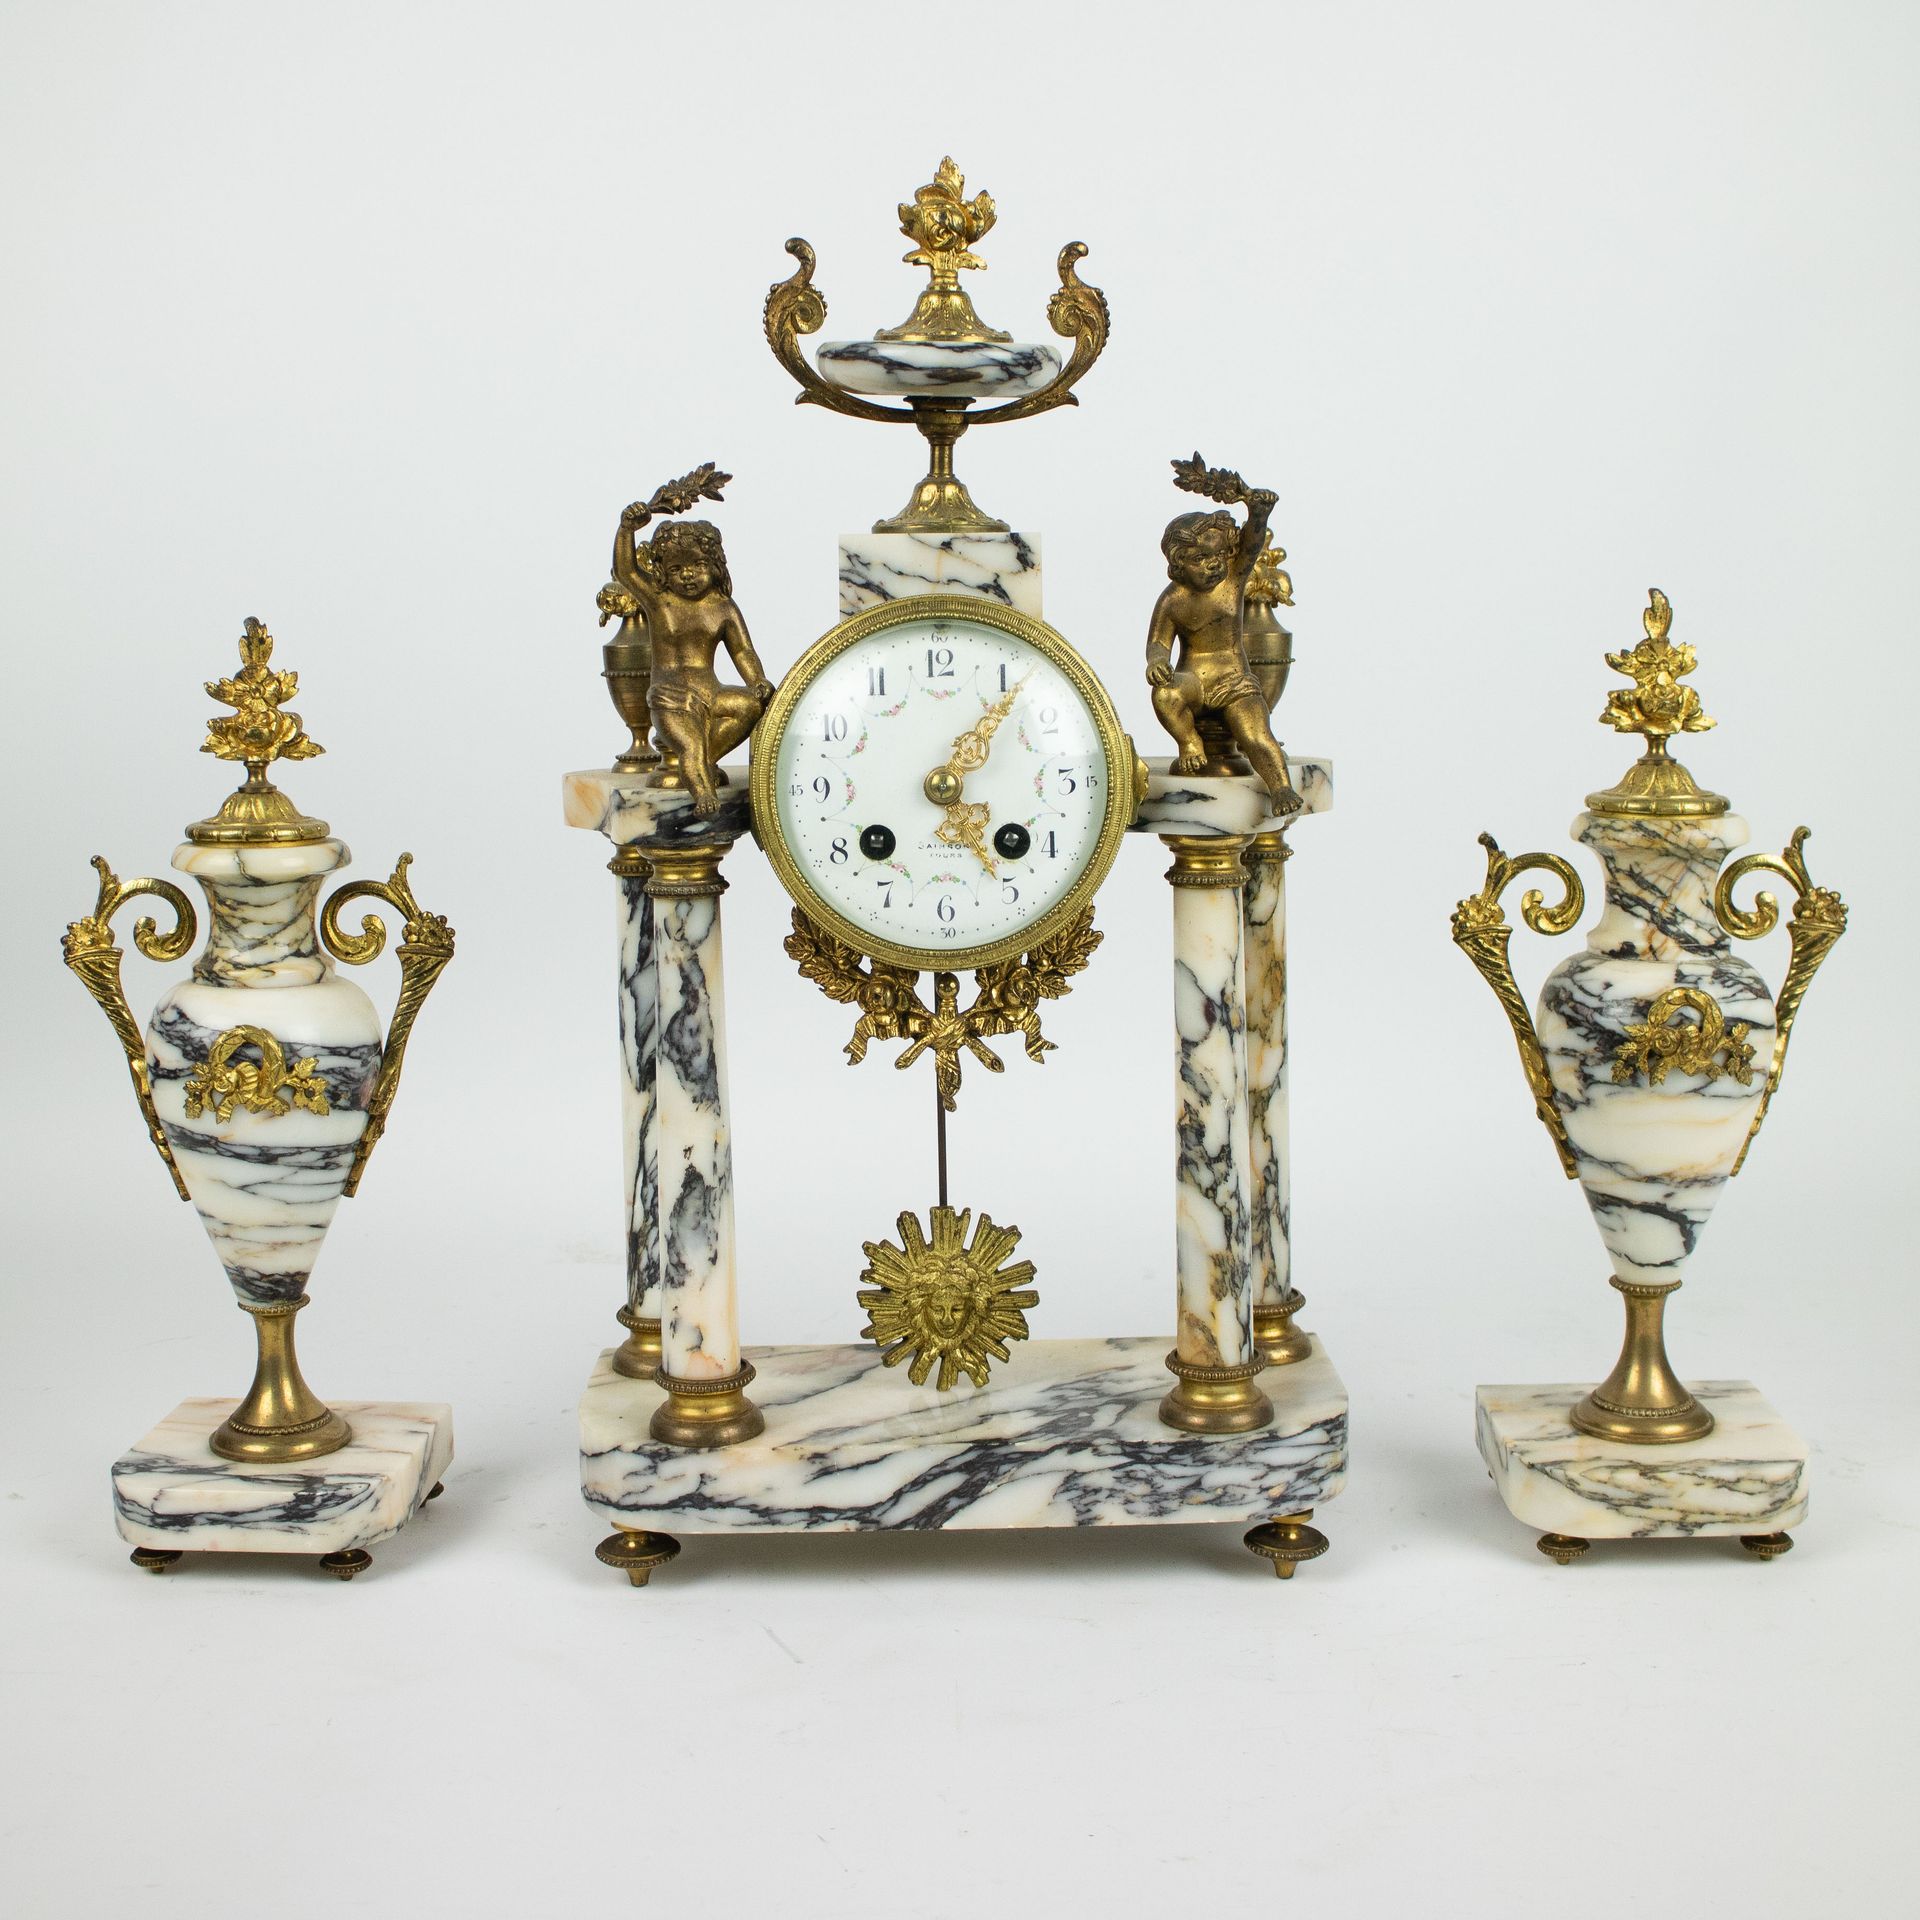 Mantle clock style Louis XVI 有纹路的白色大理石和鎏金青铜。路易十六时期的石雕。
高29.5 - 43.5厘米。